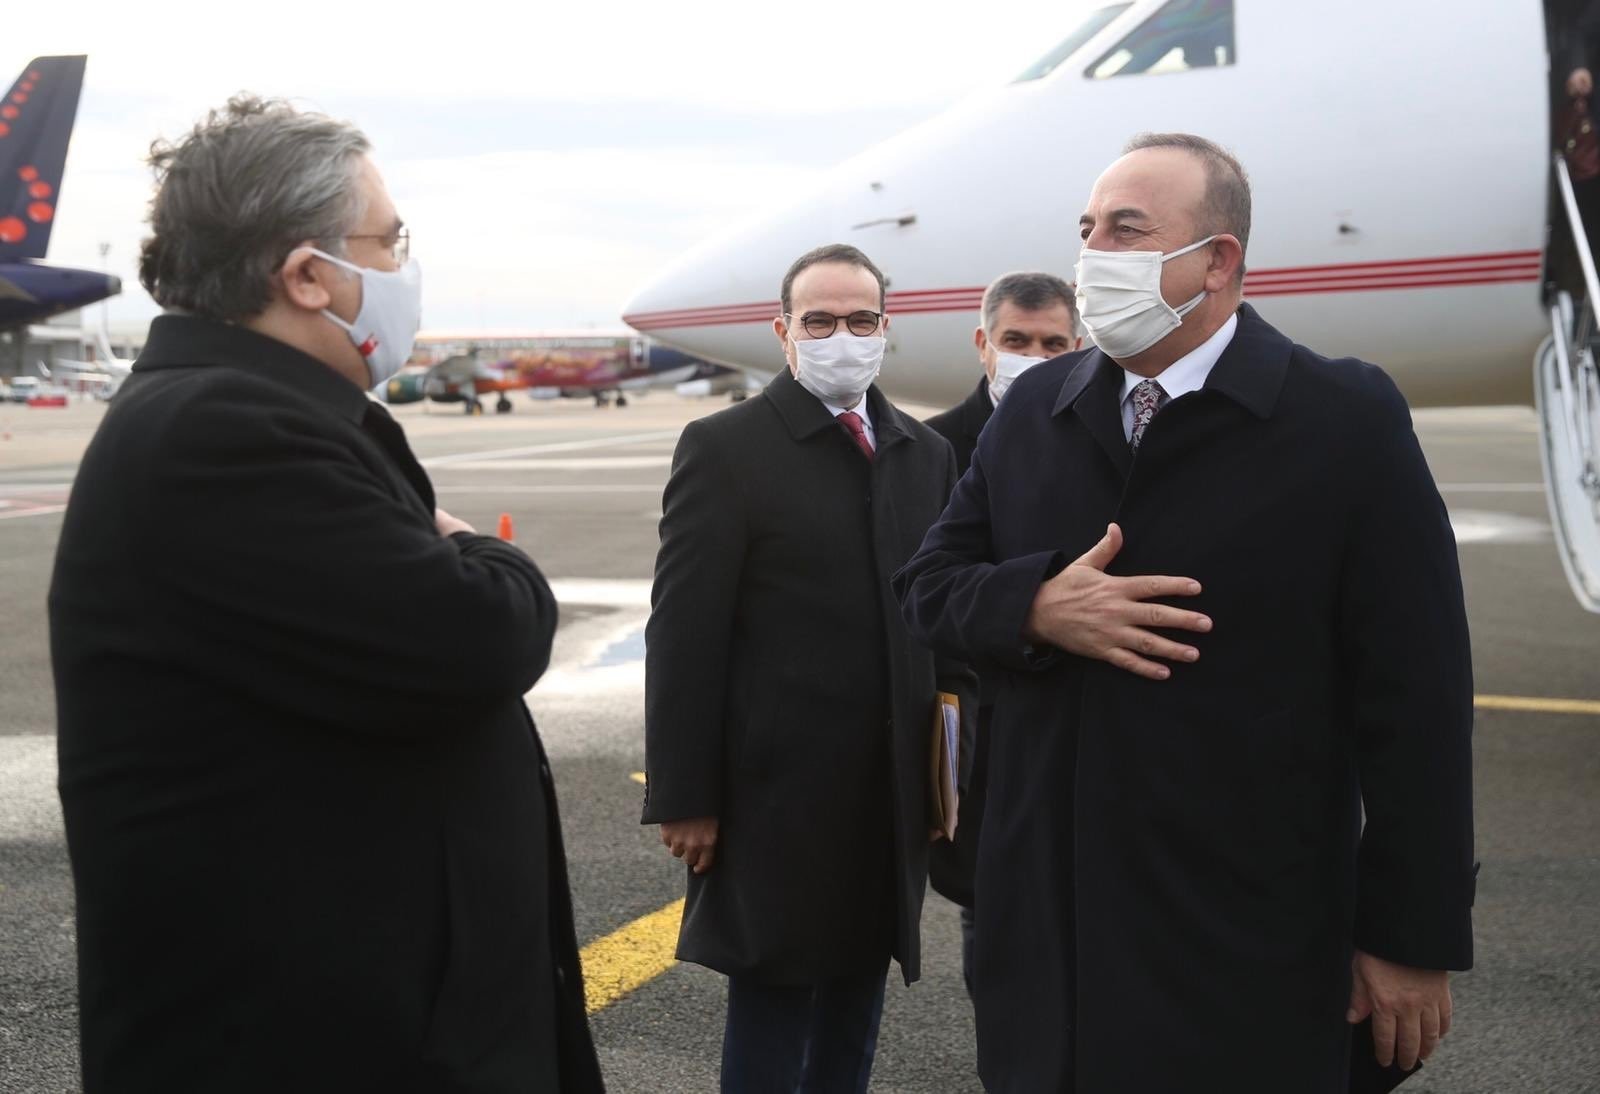 Foreign Minister Mevlüt Çavuşoğlu arrives for high-level talks with European Union and NATO officials in Brussels, Belgium, Jan. 20, 2021. (IHA Photo)